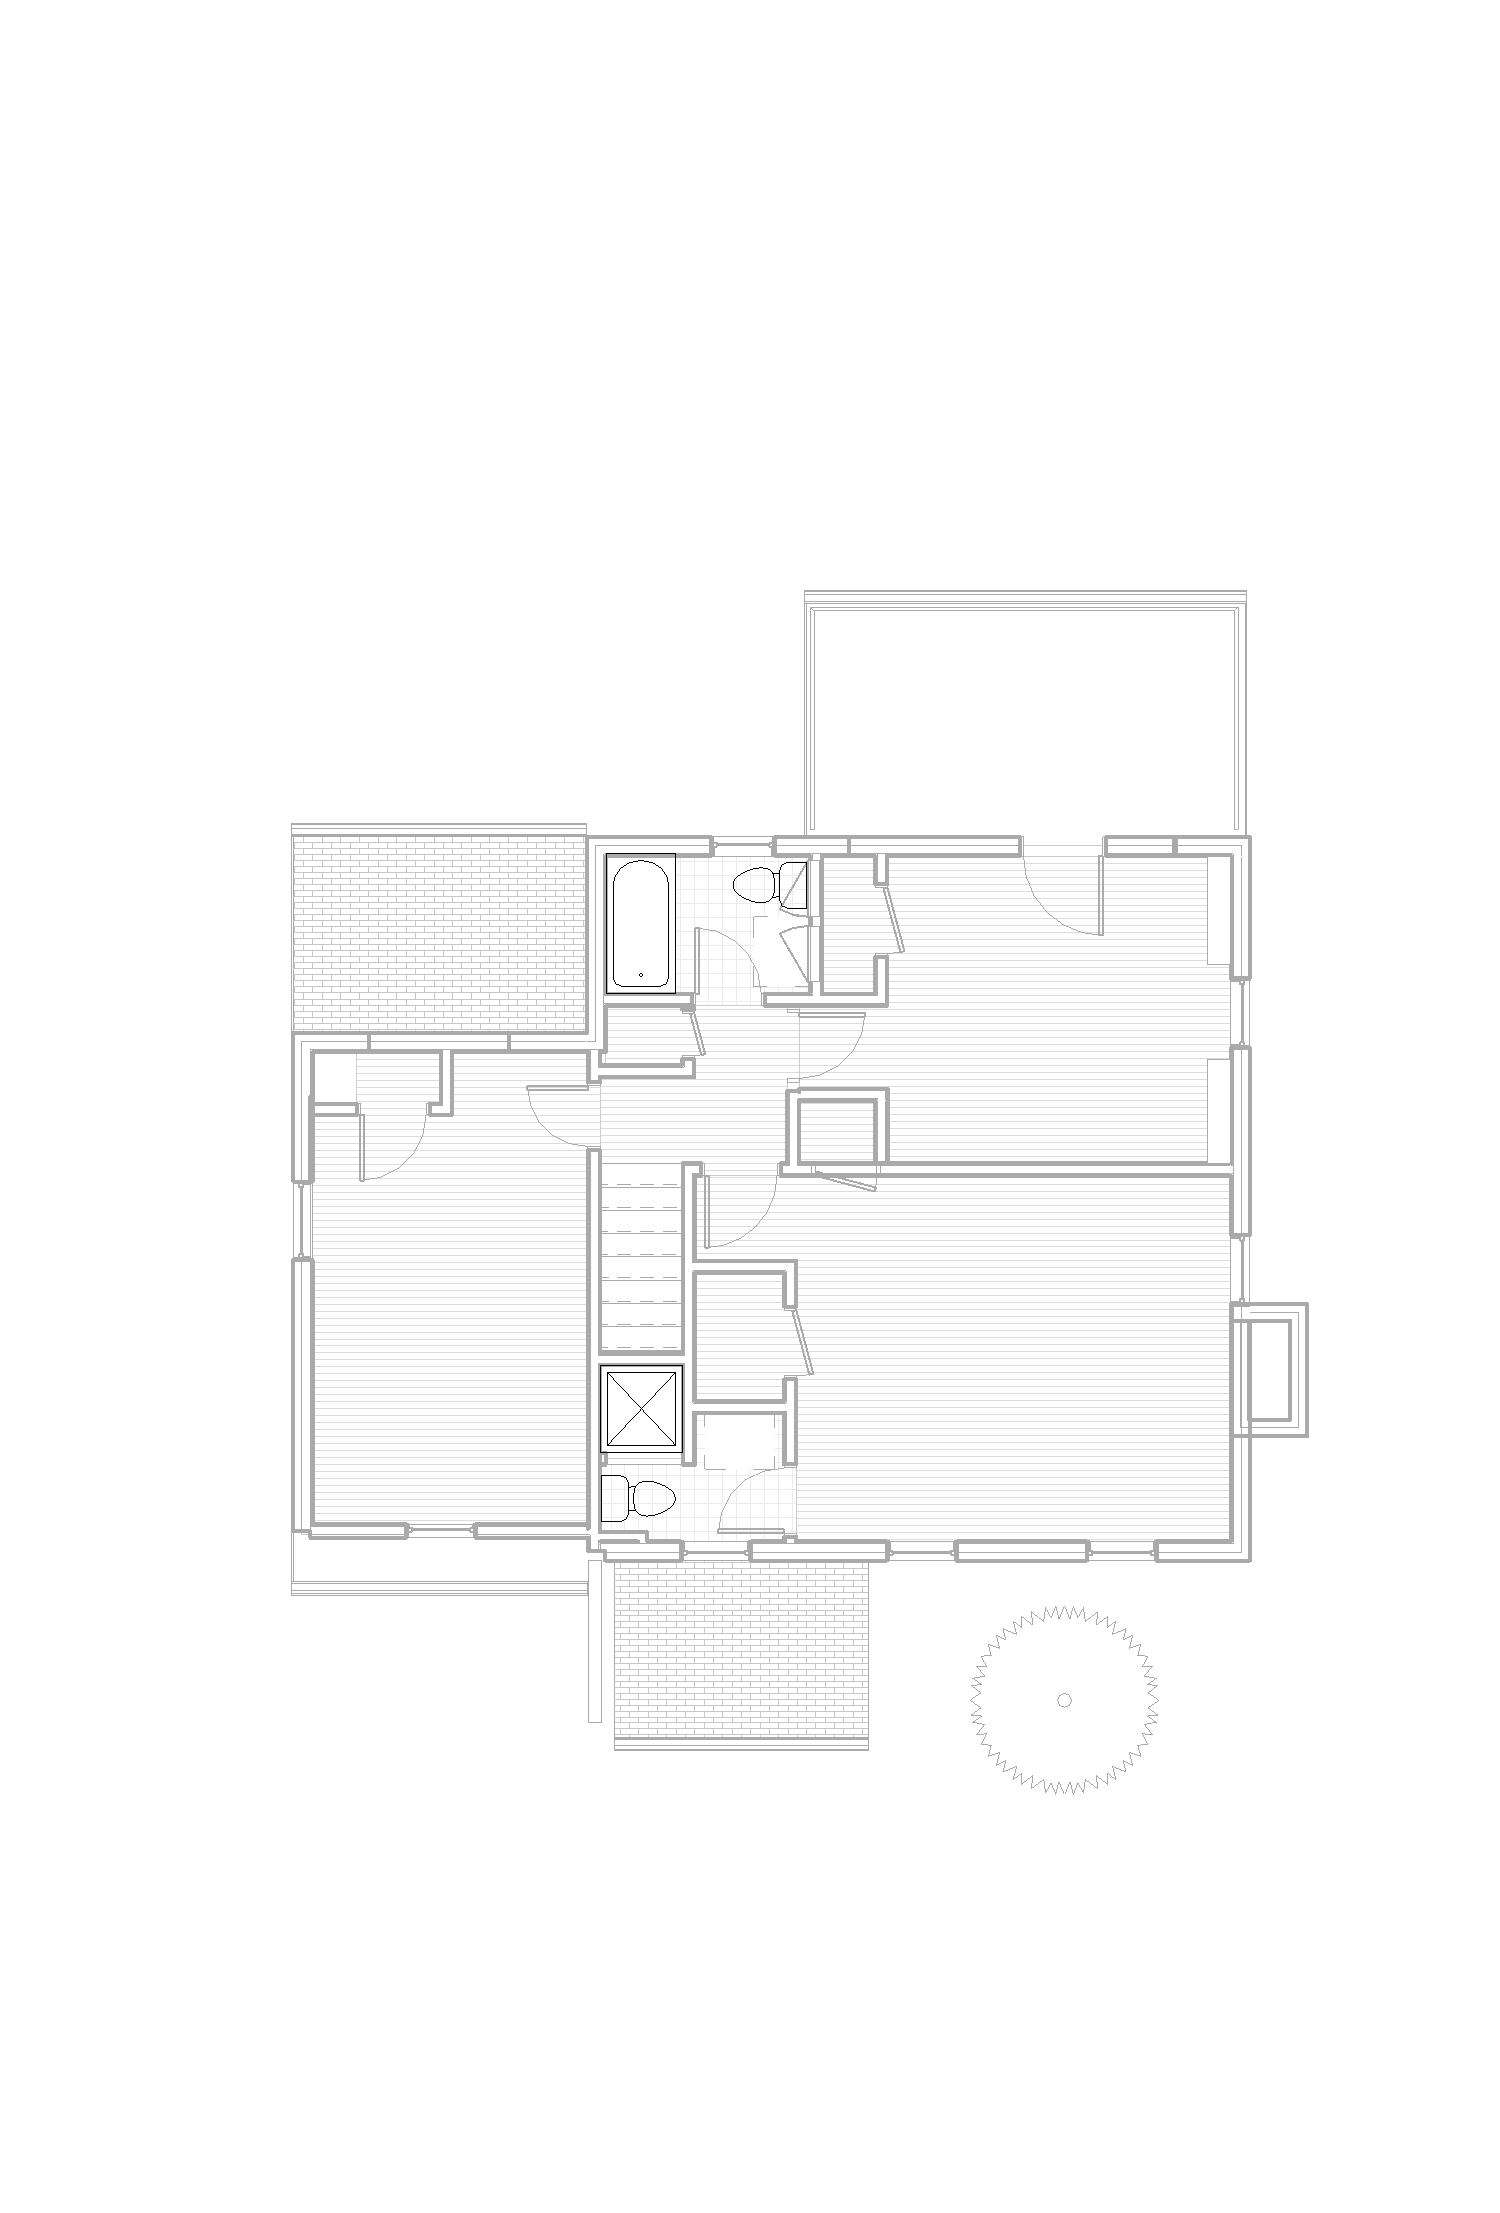 2014-04 4015 Veazey St NW_CENTRAL_09 - Floor Plan - 2ND FLOOR - EXISTING.jpg